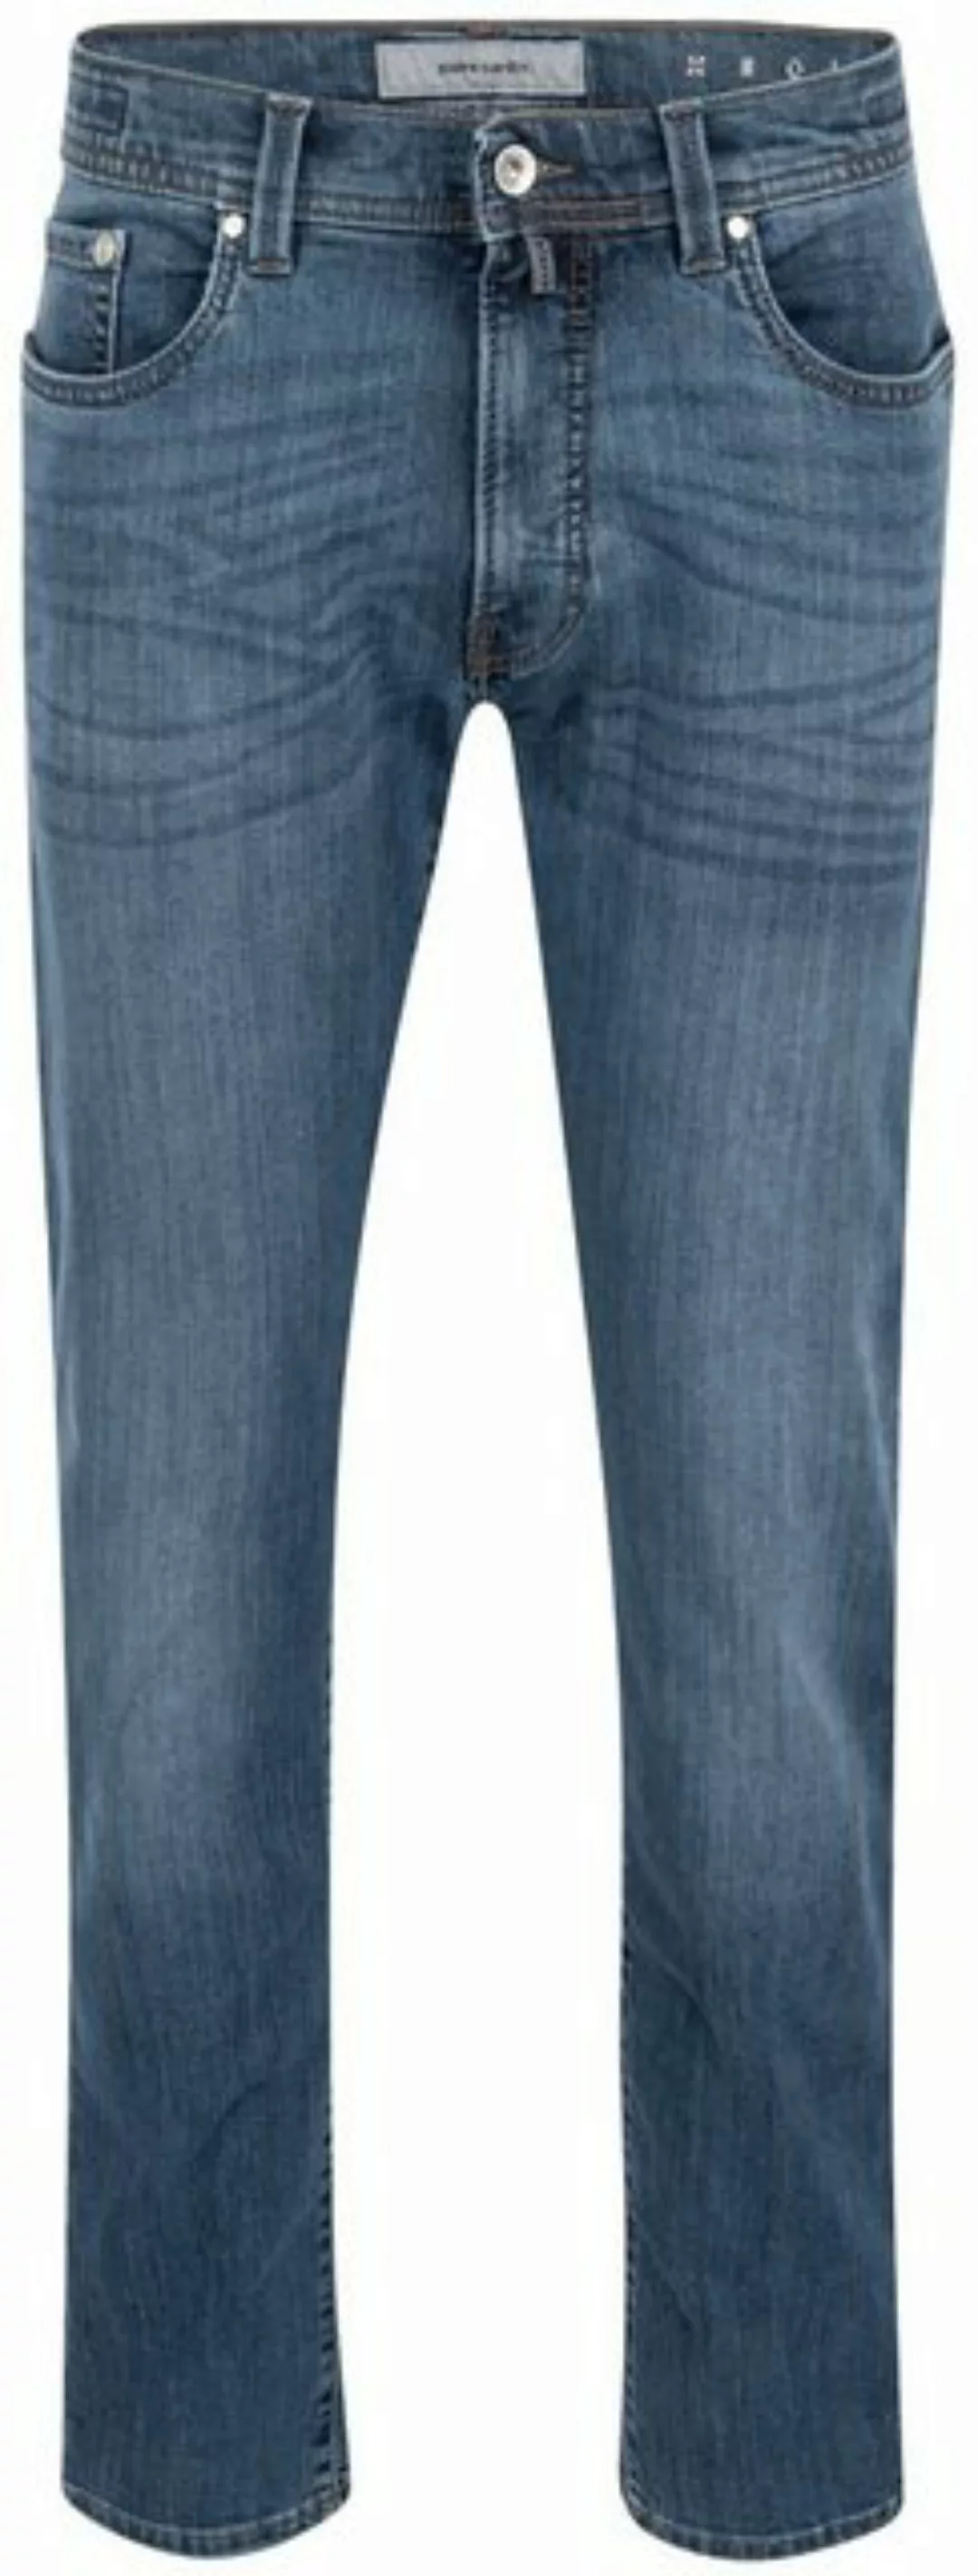 Pierre Cardin 5-Pocket-Jeans PIERRE CARDIN LYON TAPERED blue fashion 38510 günstig online kaufen